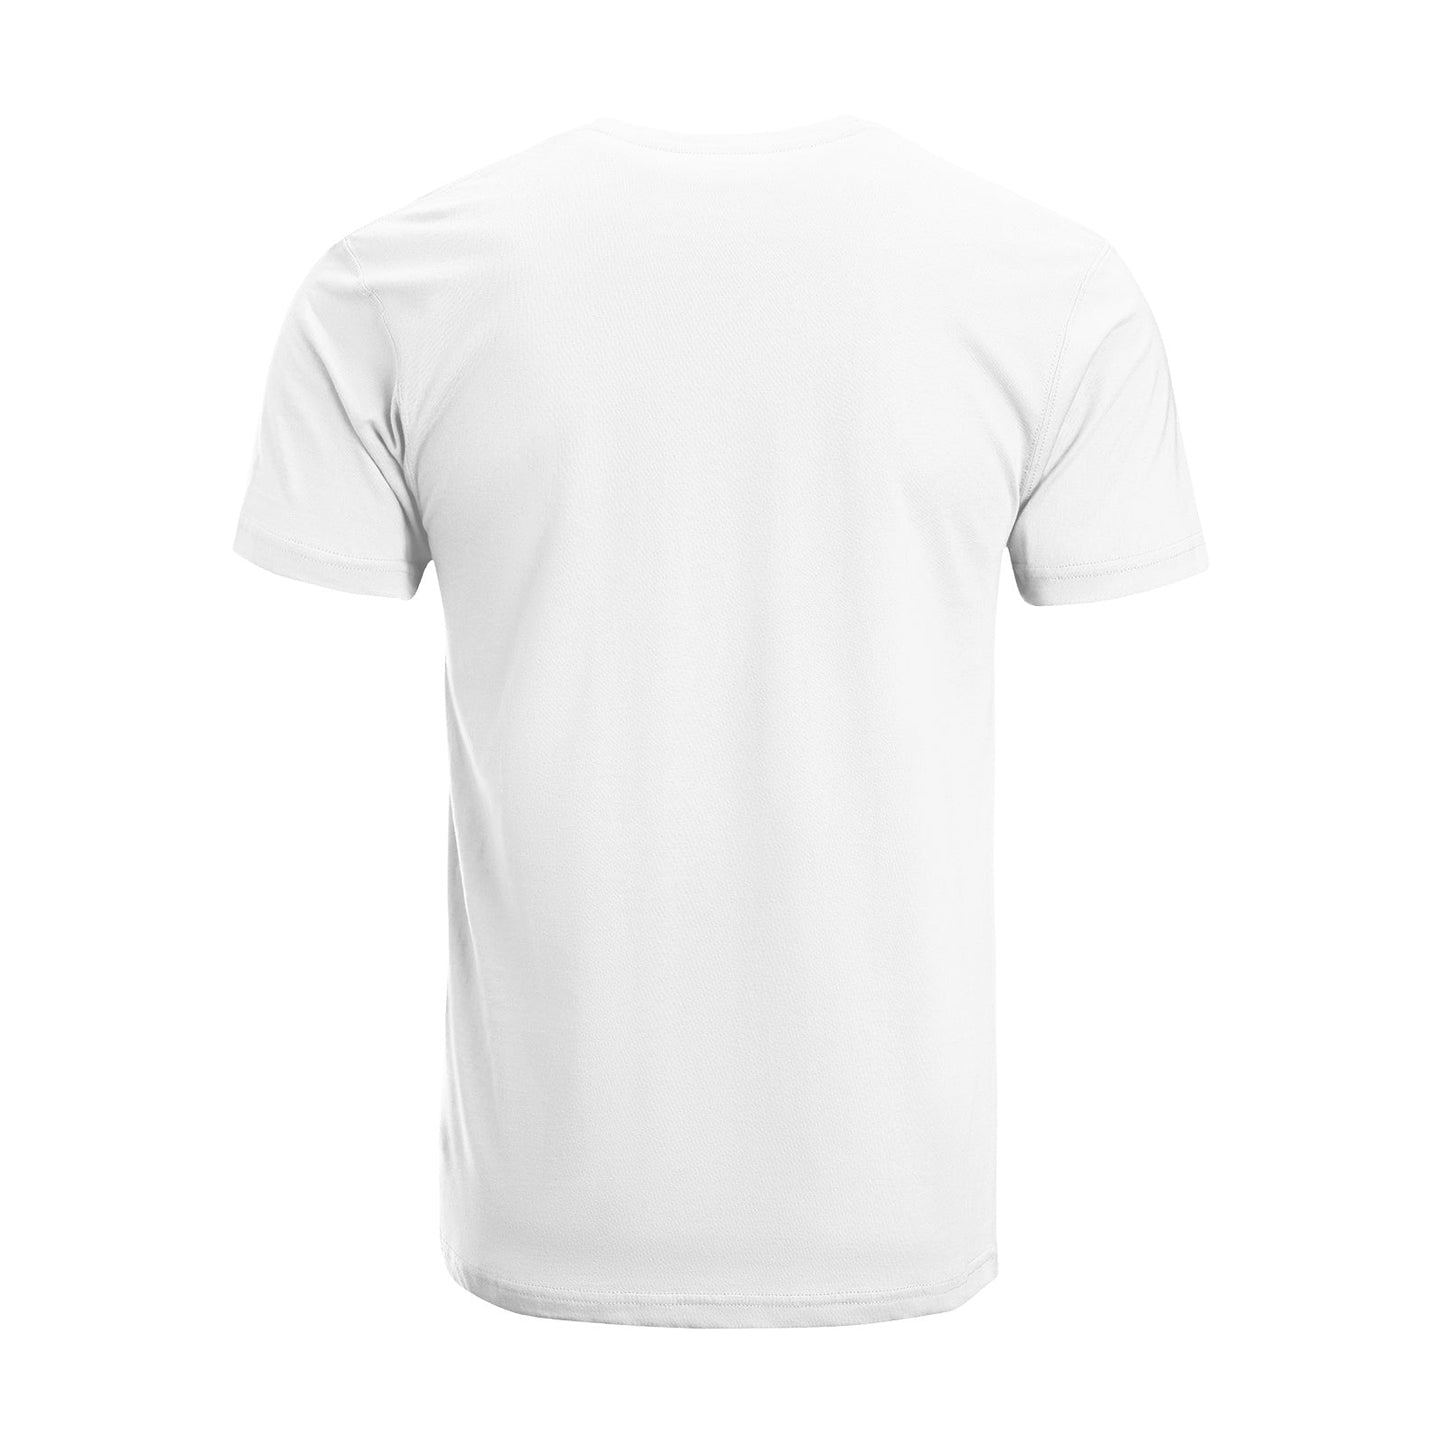 Unisex Short Sleeve Crew Neck Cotton Jersey T-Shirt DOG 44